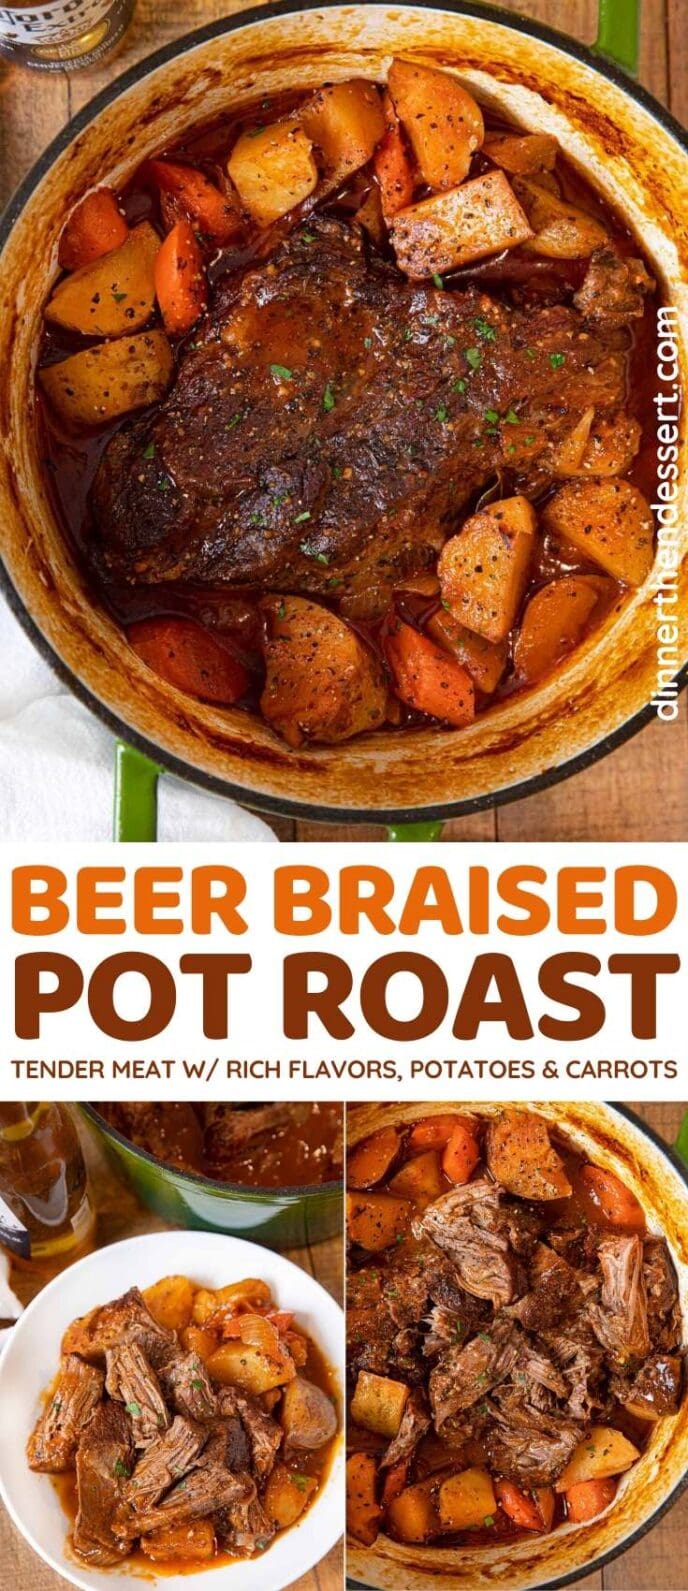 Beer Braised Pot Roast collage